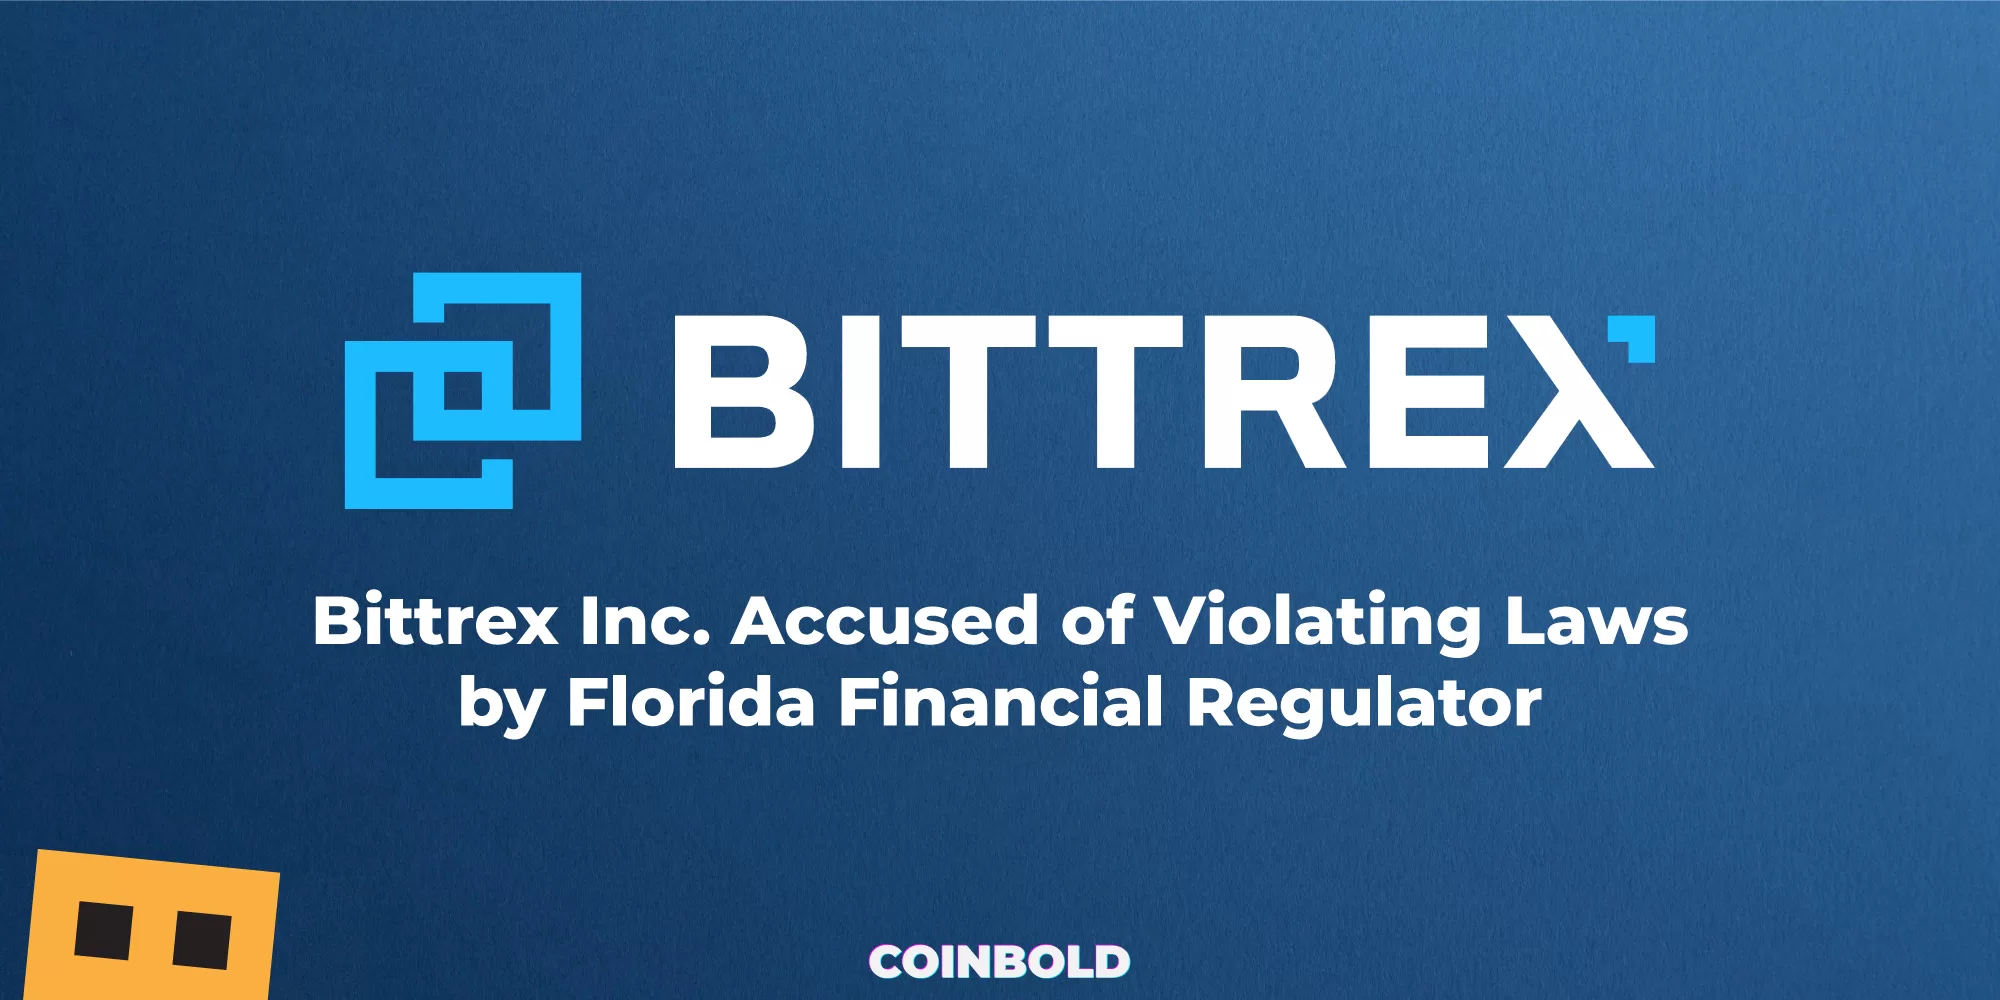 Bittrex Inc. Accused of Violating Laws by Florida Financial Regulator